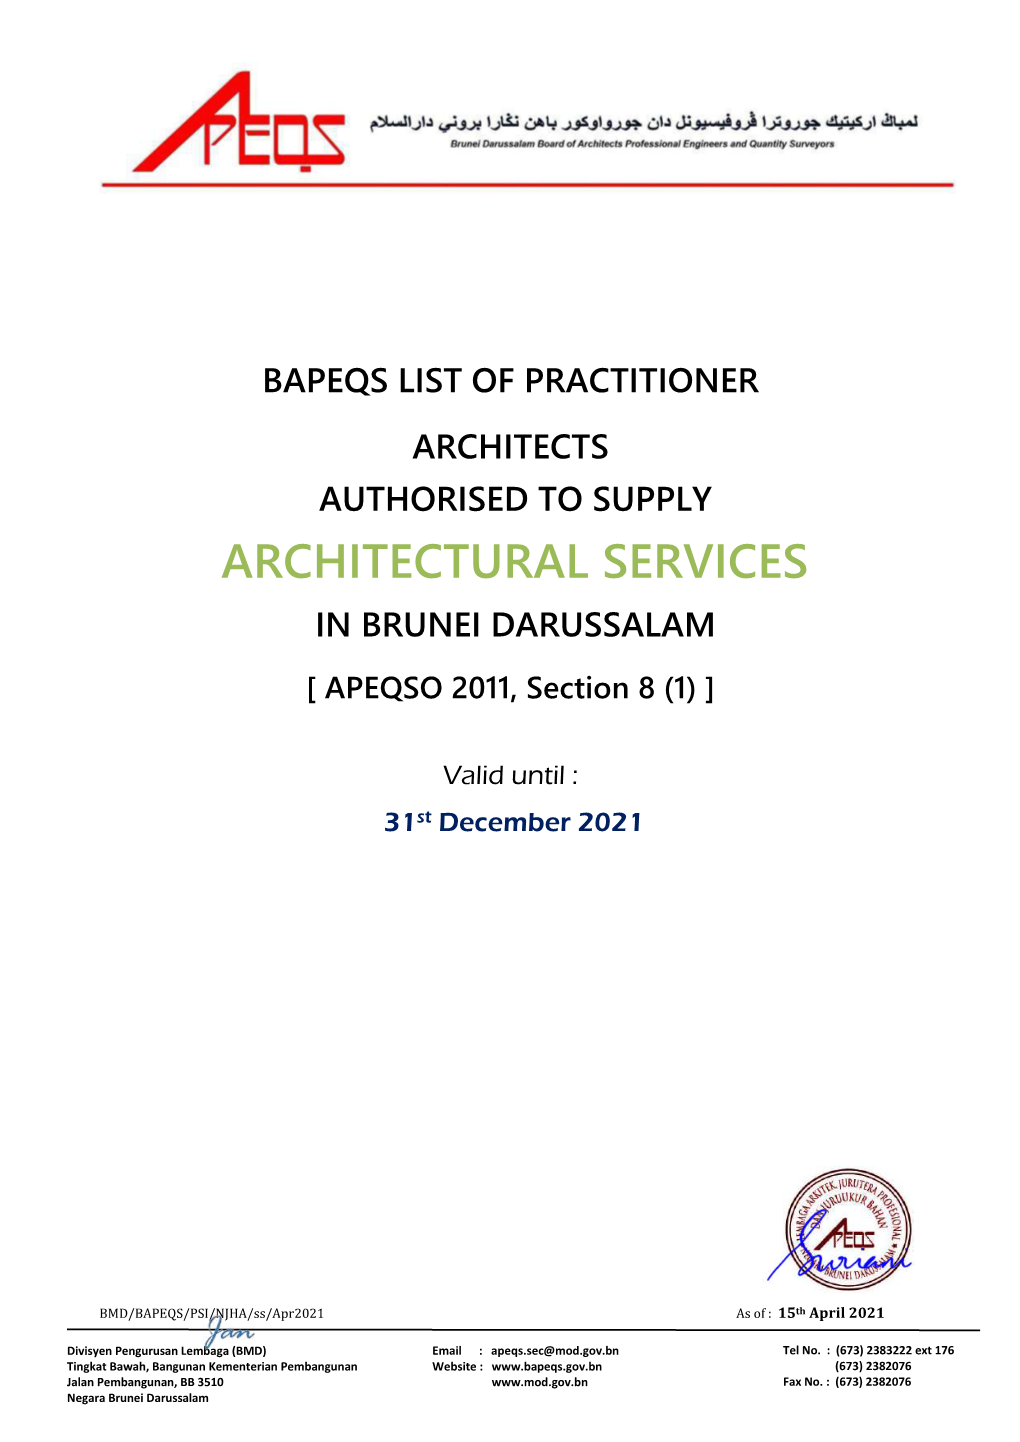 Architectural Services in Brunei Darussalam